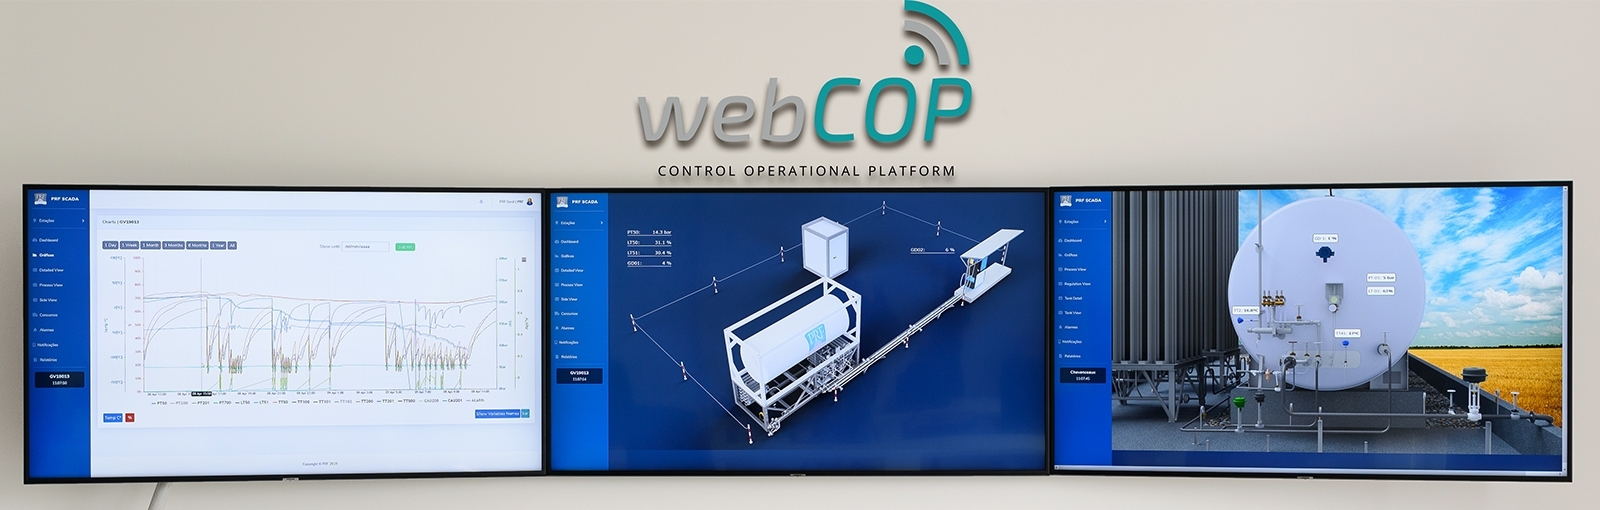 webCOP